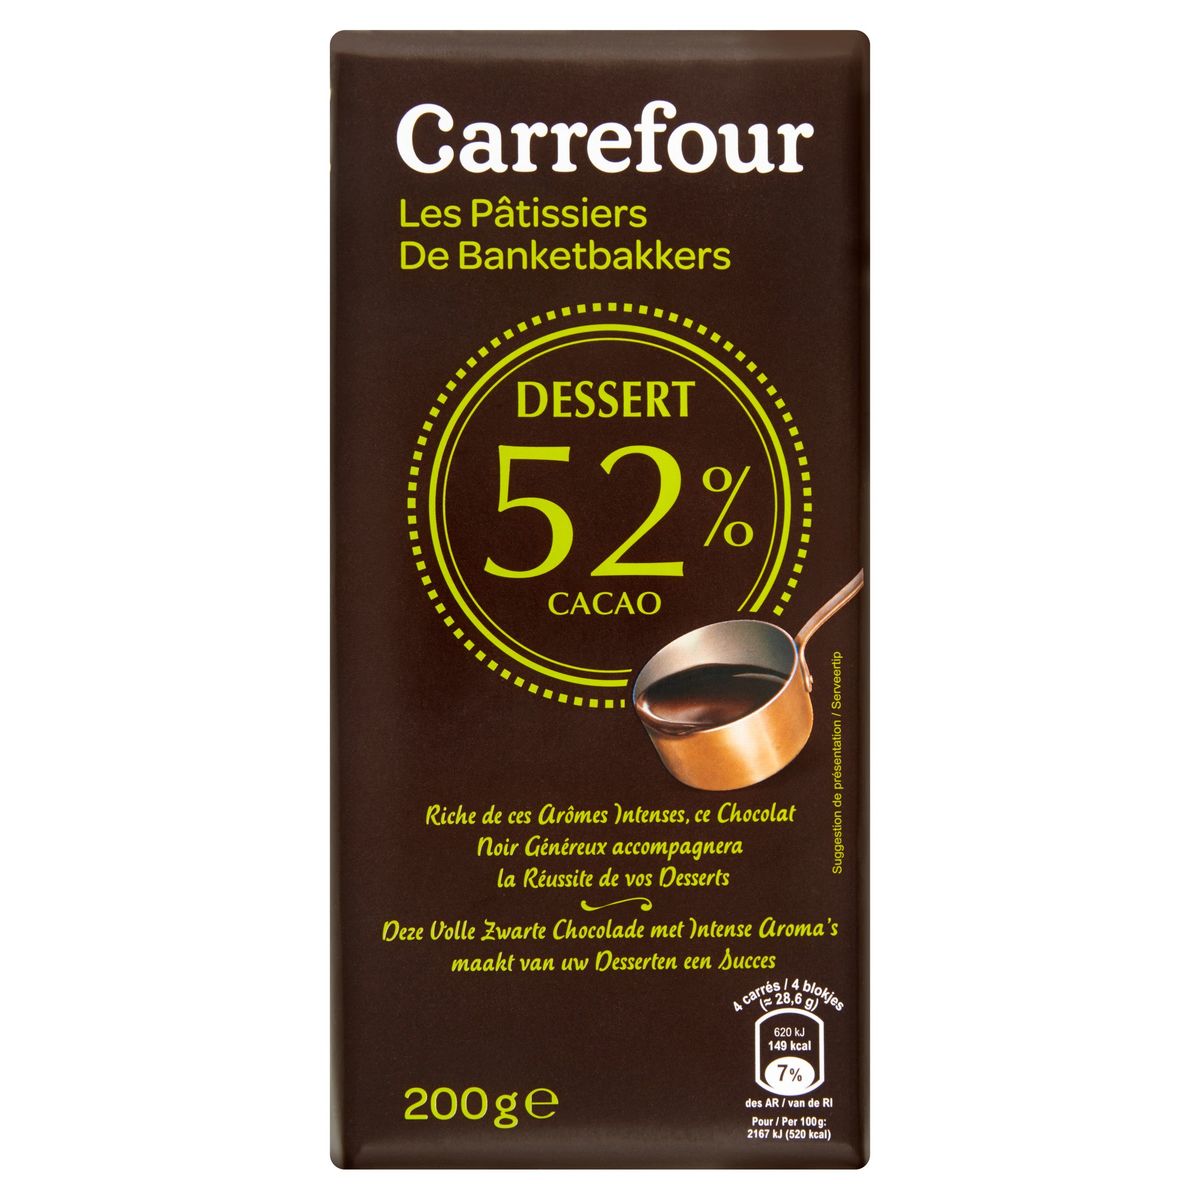 Carrefour De Banketbakkers Dessert 52% Cacao 200 g